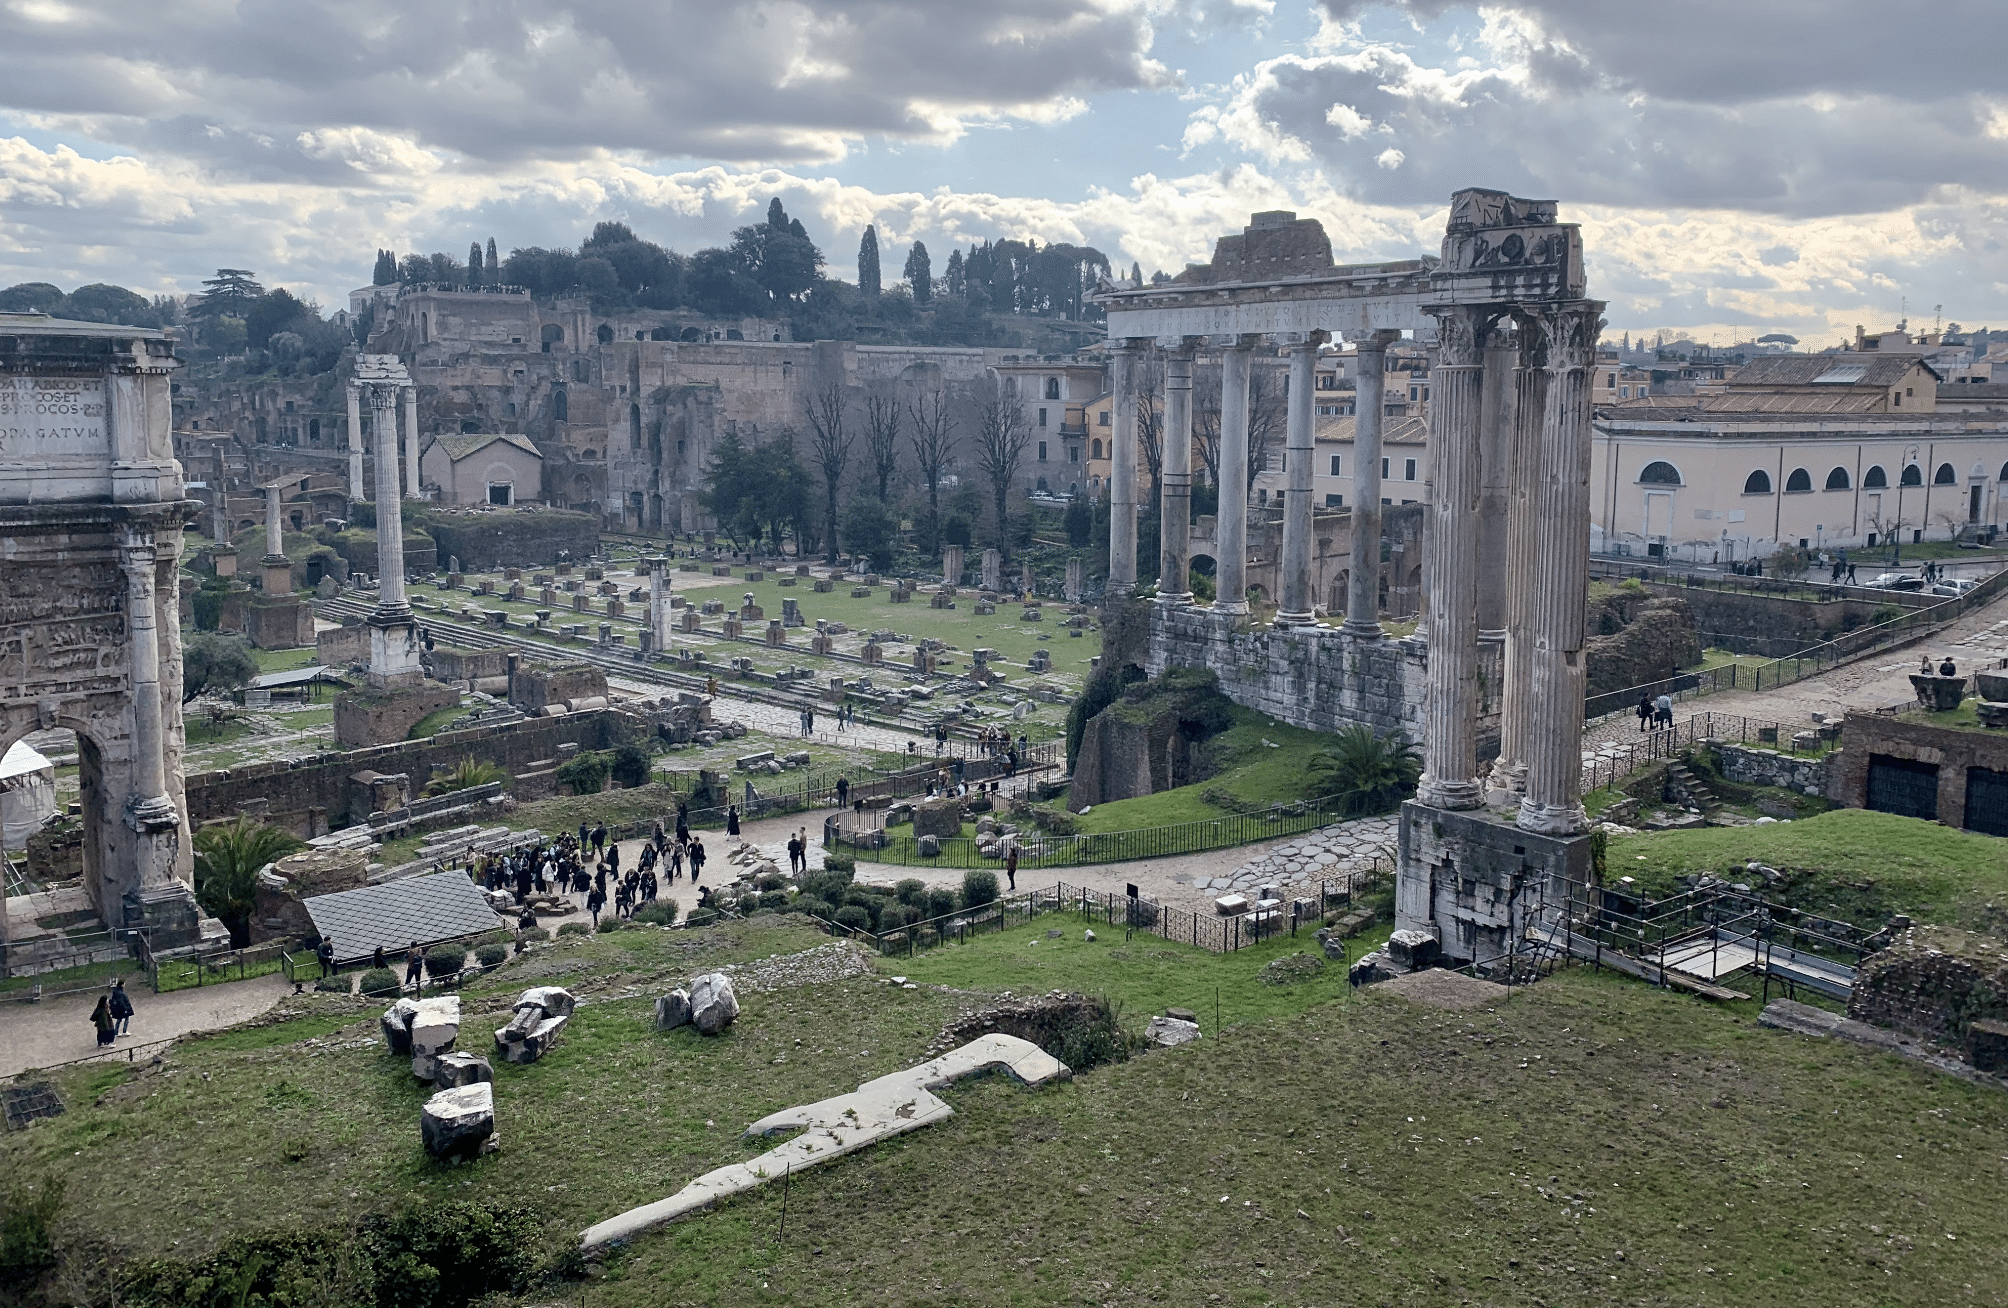 forum romain en italie